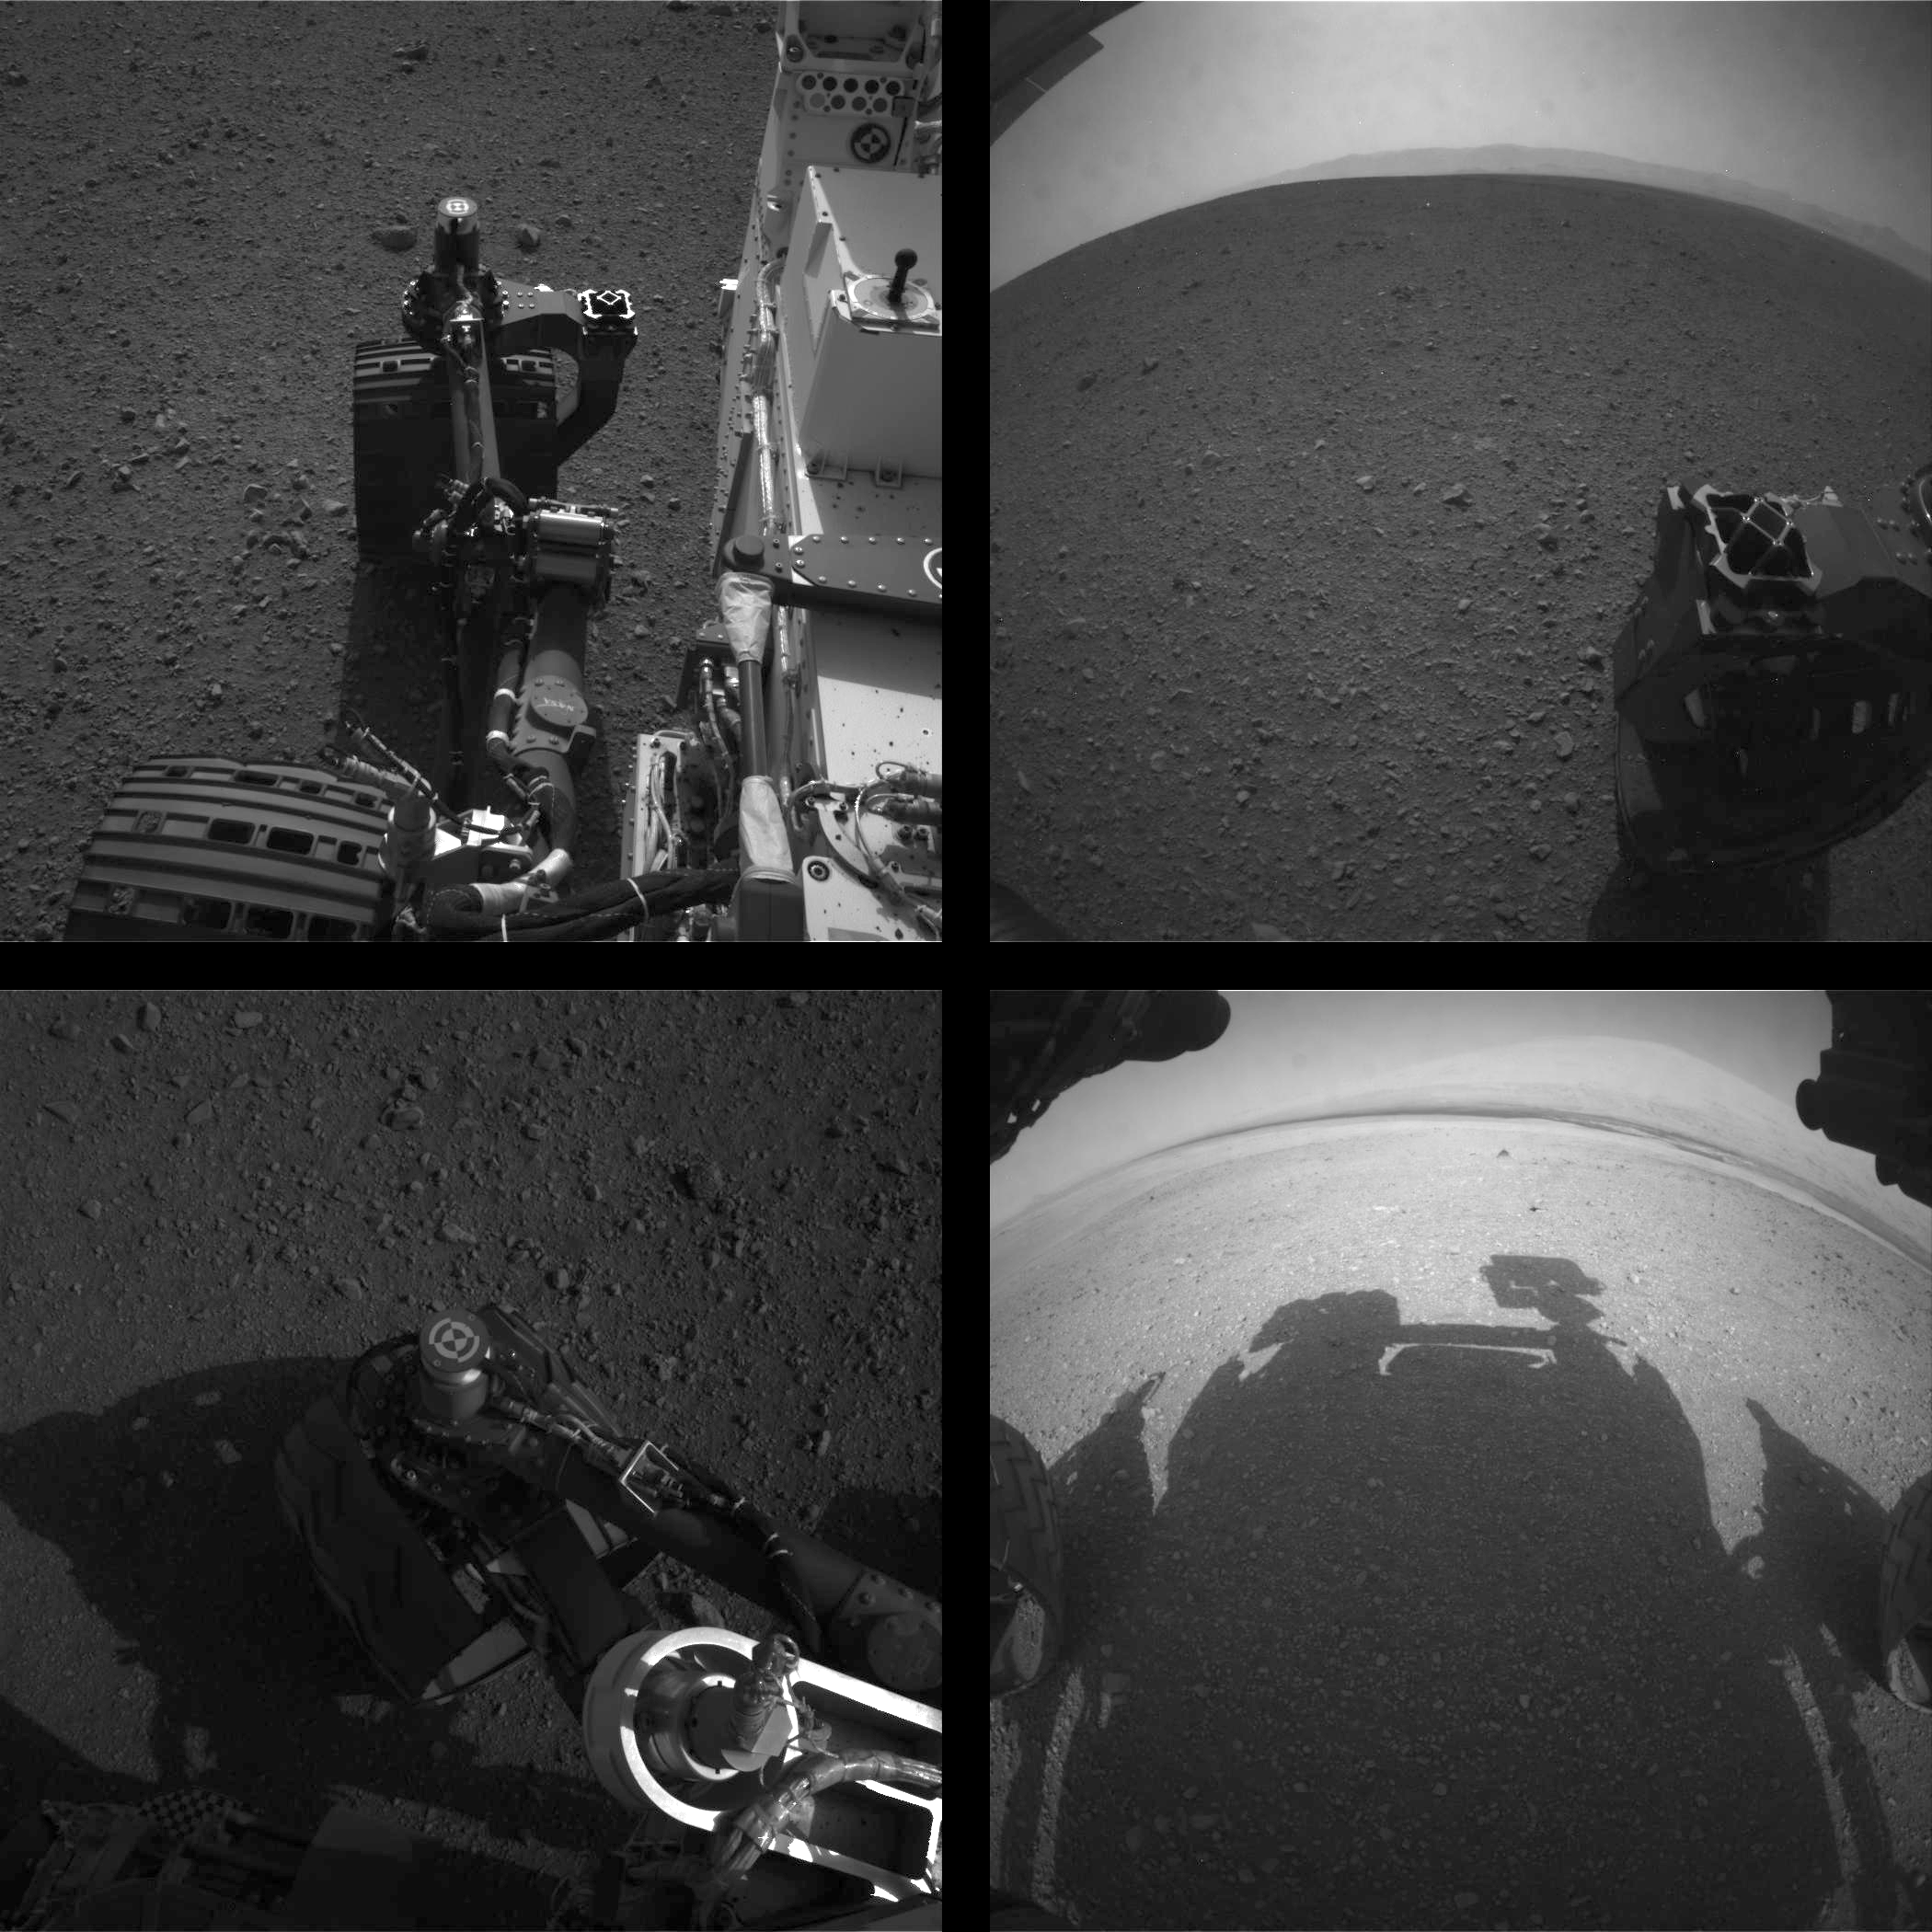 Curiosity's first wheel wiggle